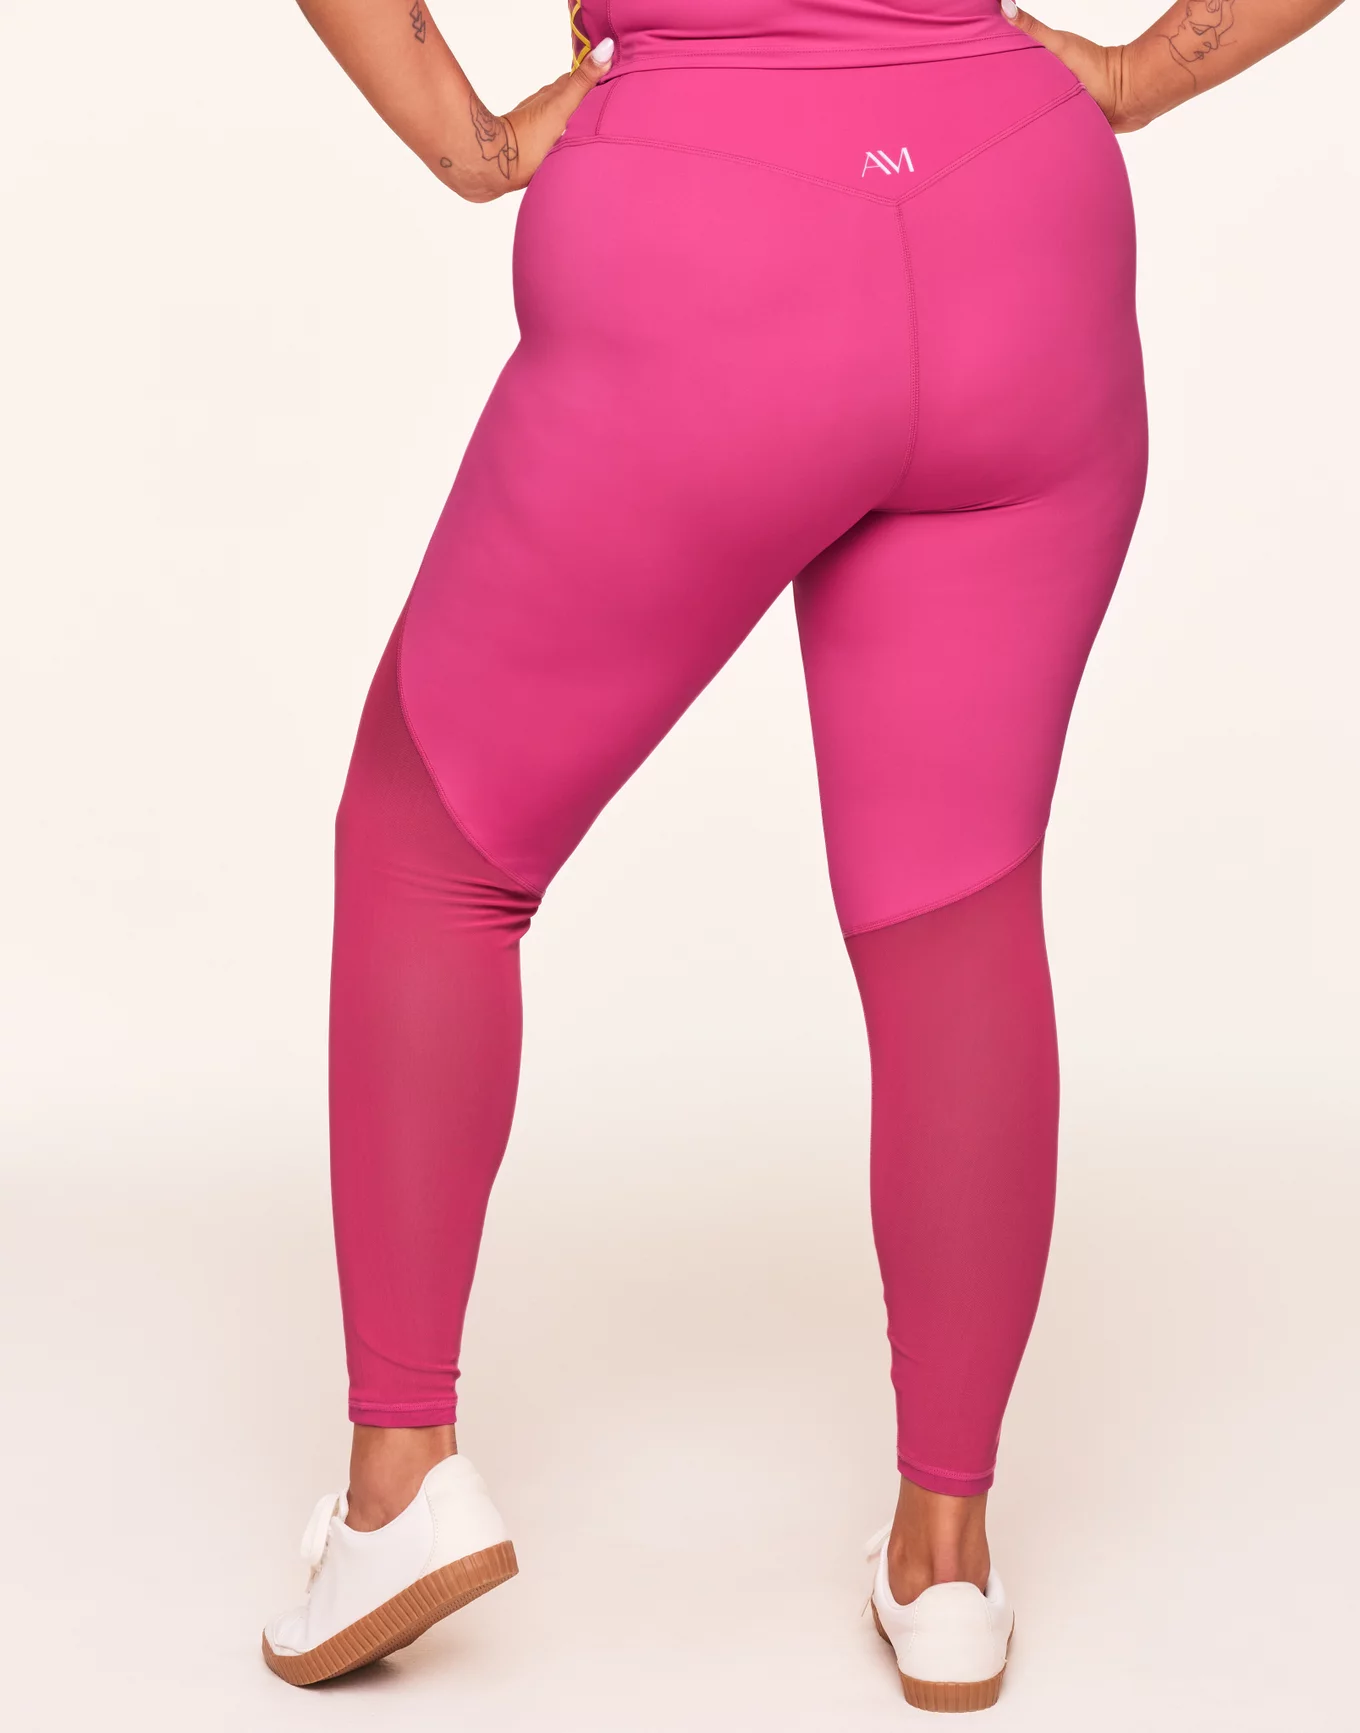 Nolina Dark Pink Plus Full Length High Rise Legging, XL-4X